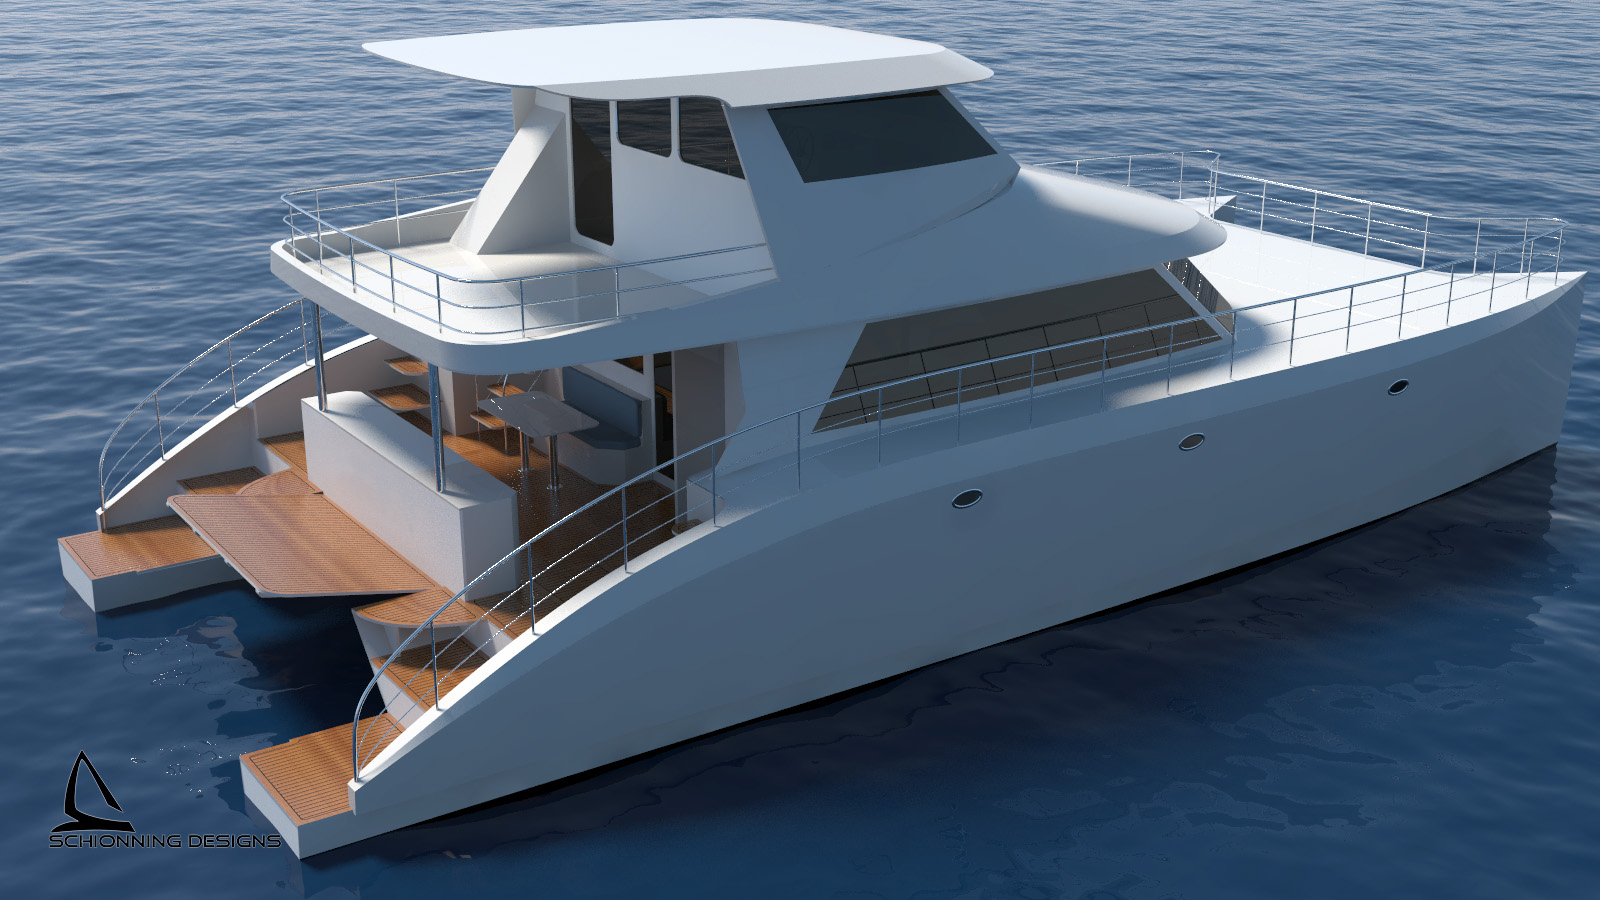 Schionning Designs Prowler 1500 Power Catamaran - Exterior CAD Render 06